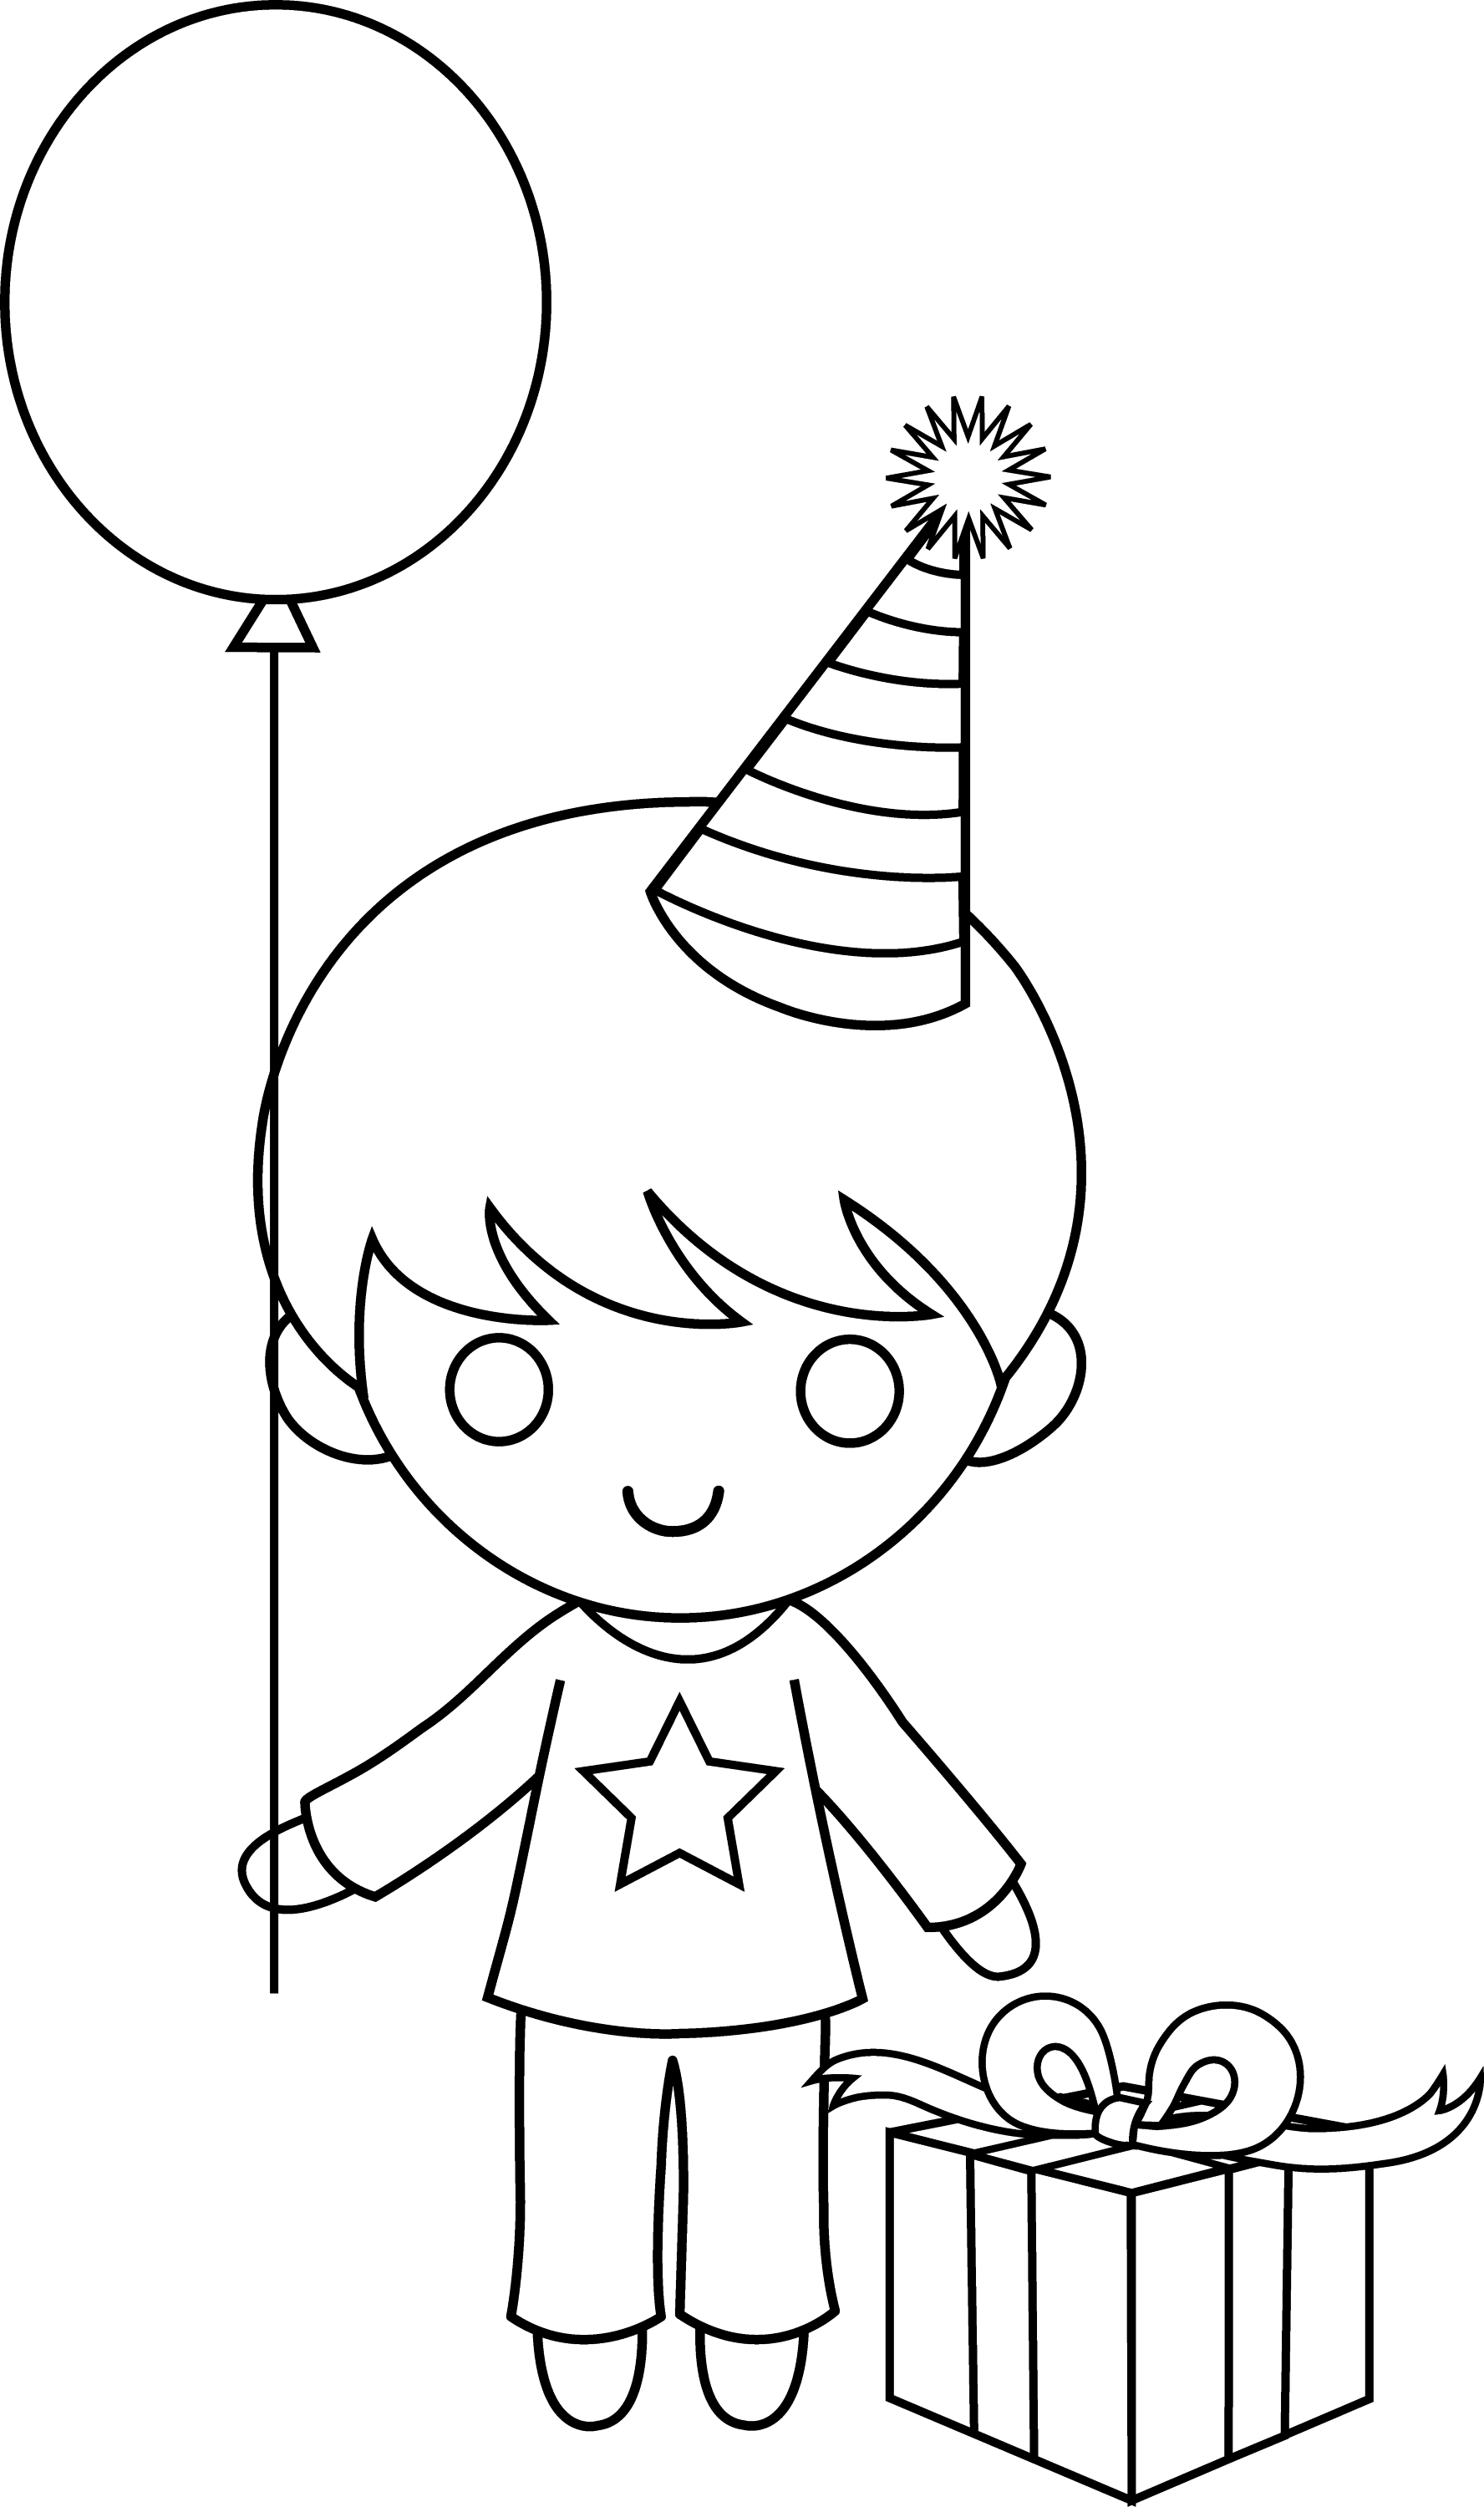 Birthday Boy Coloring Page - Free Clip Art